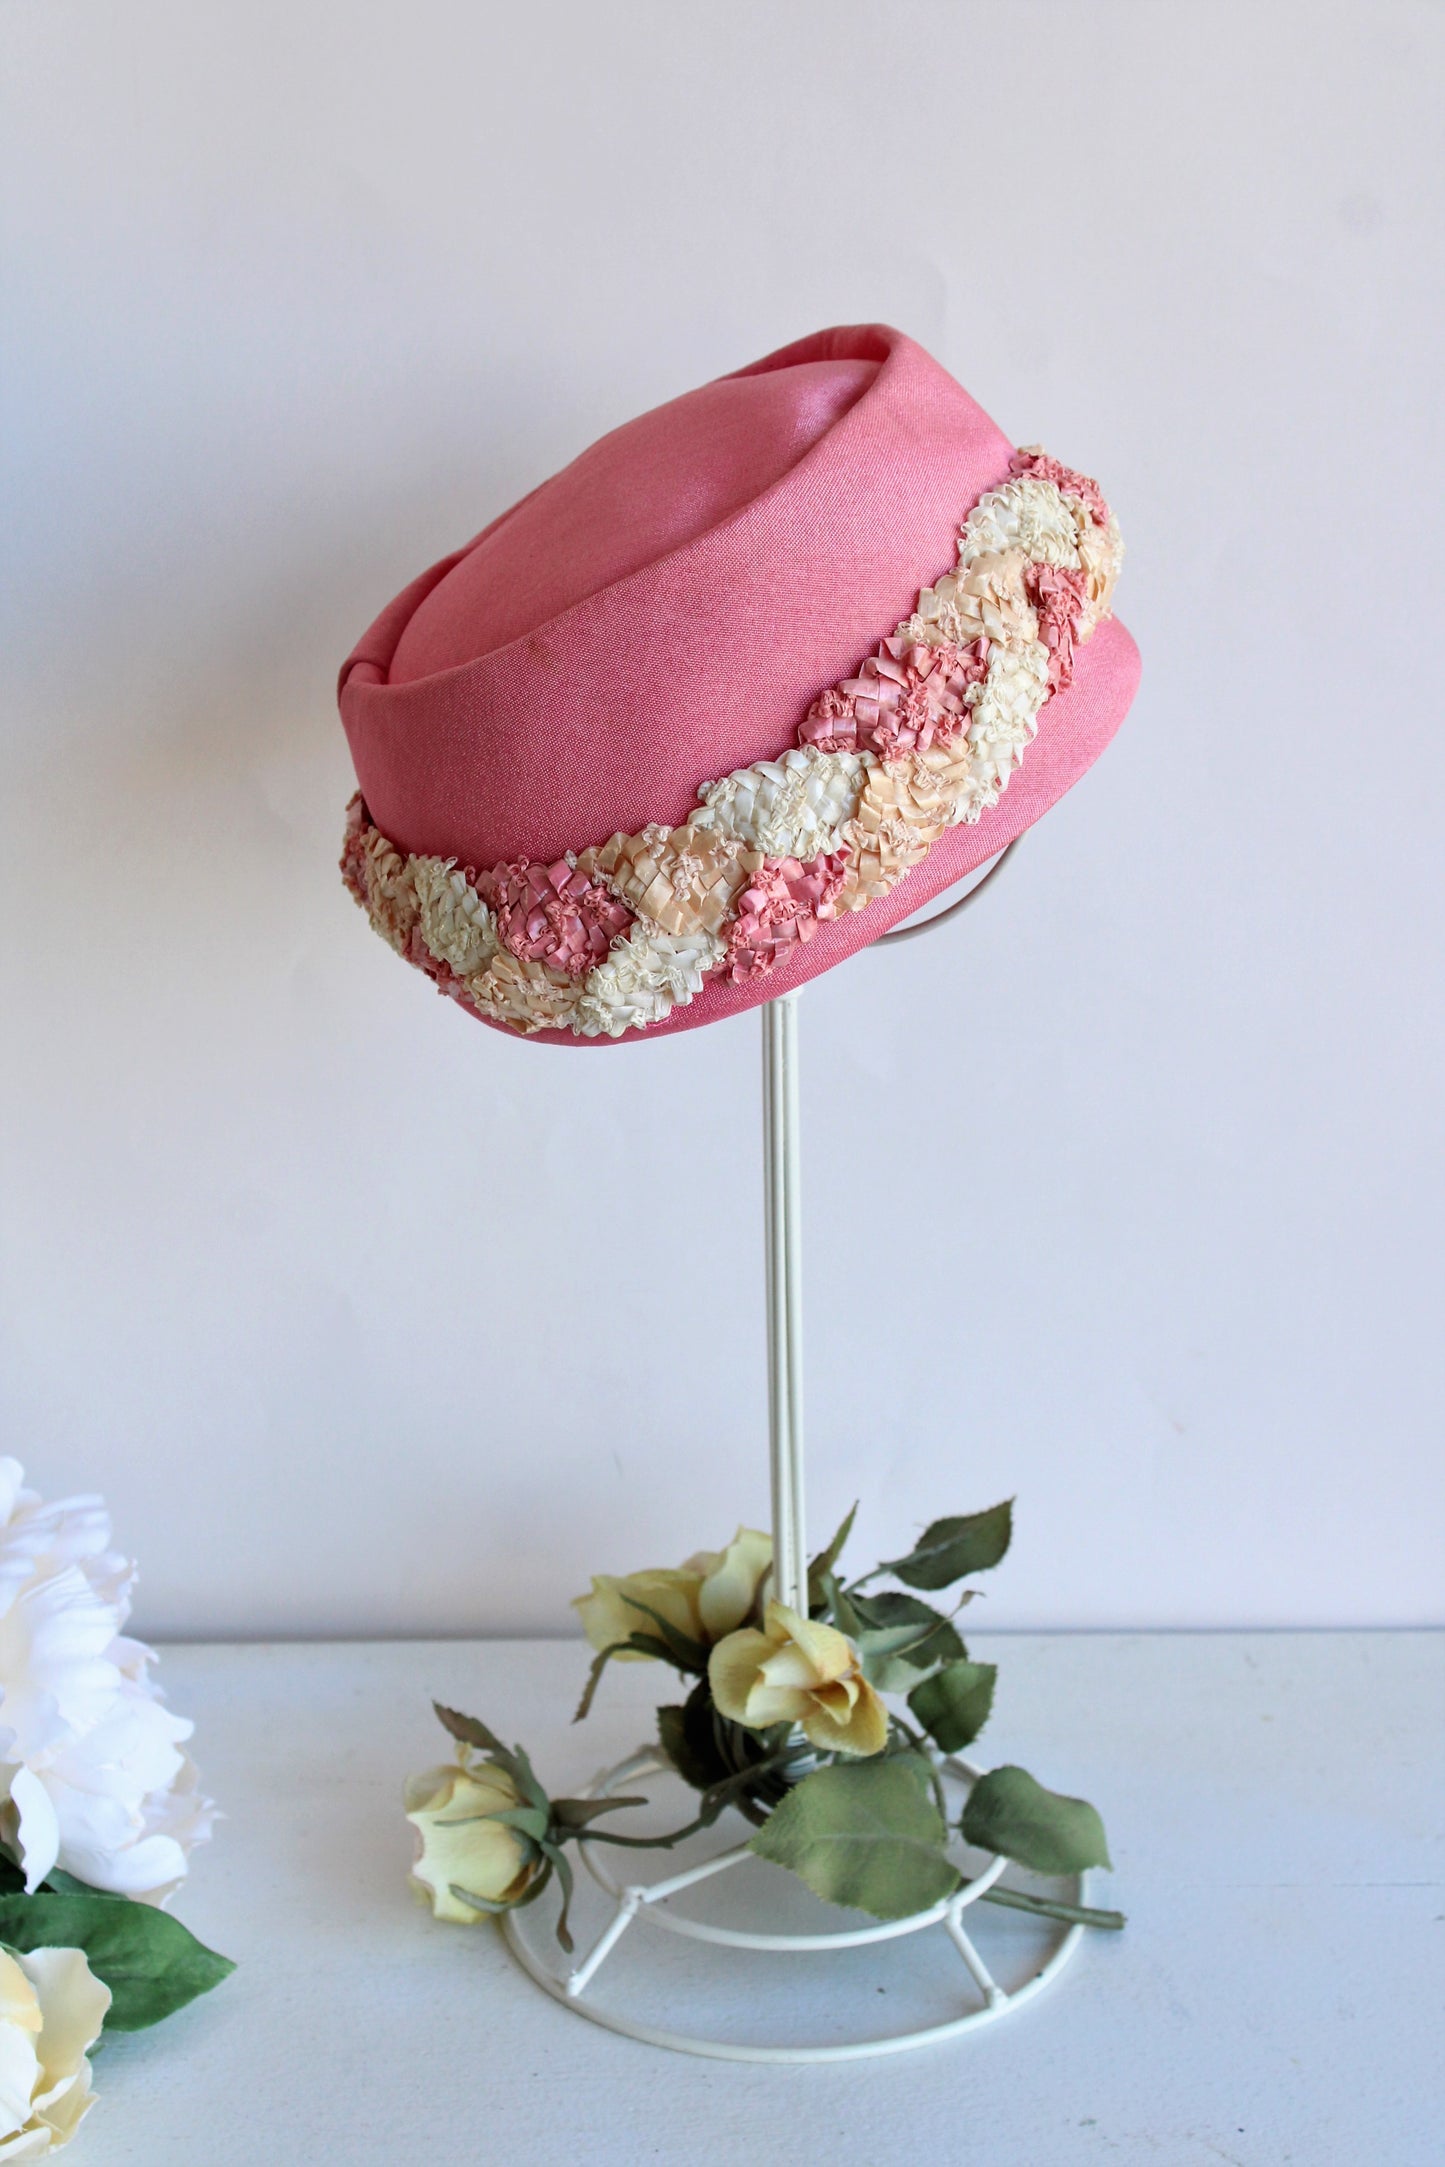 Vintage 1960s Pink Pillbox Silk Hat With Woven Straw or Raffia Trim